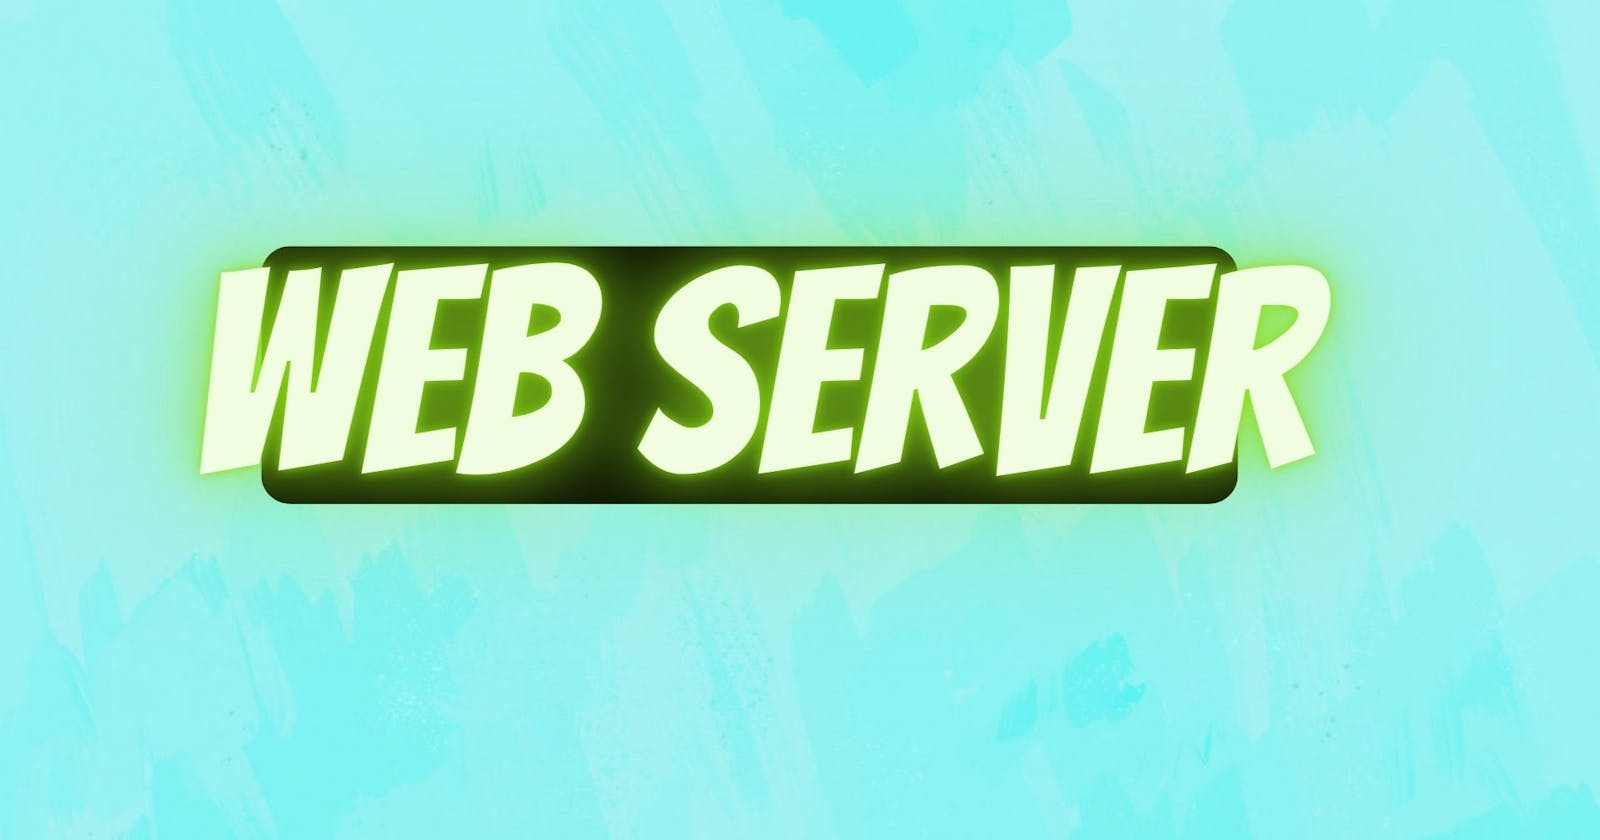 web server